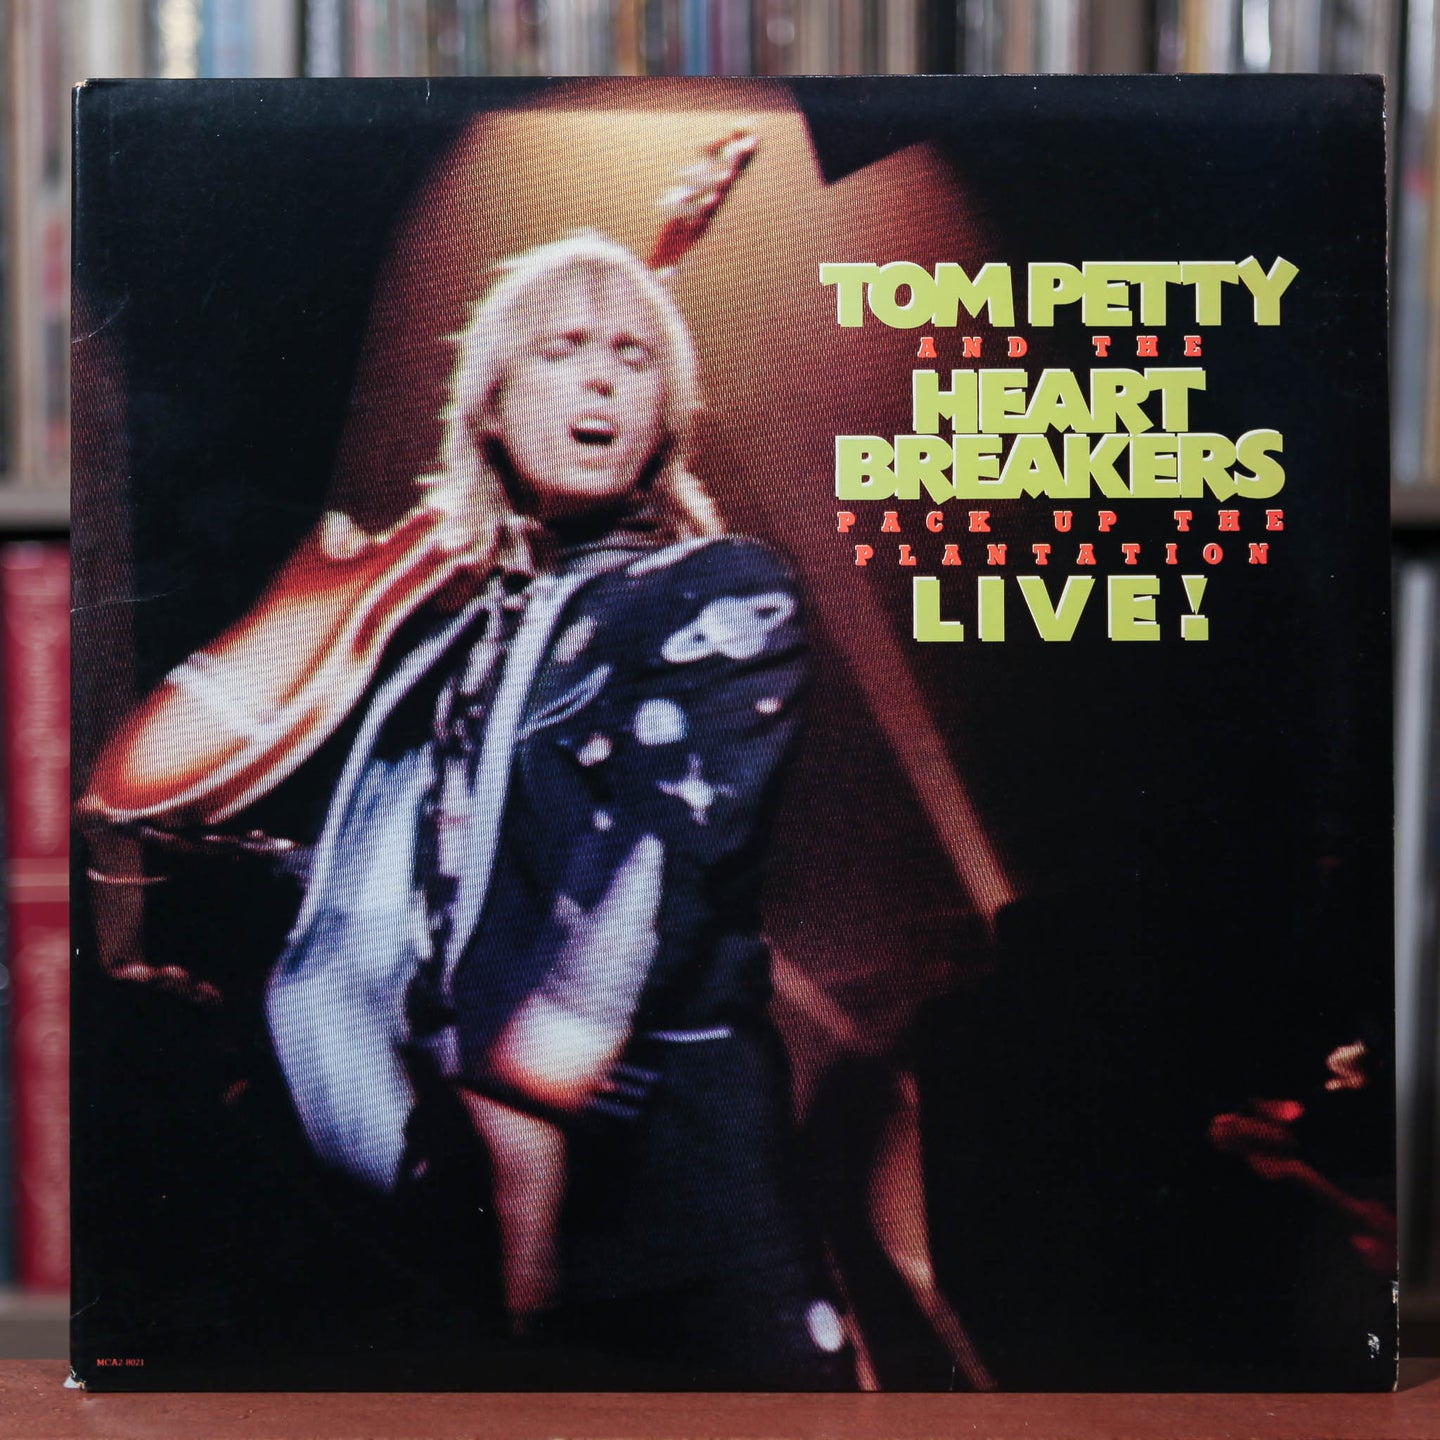 Tom Petty - Pack Up The Plantation - Live! - 2LP - 1985 MCA, VG+/VG+ w/Tour Booklet